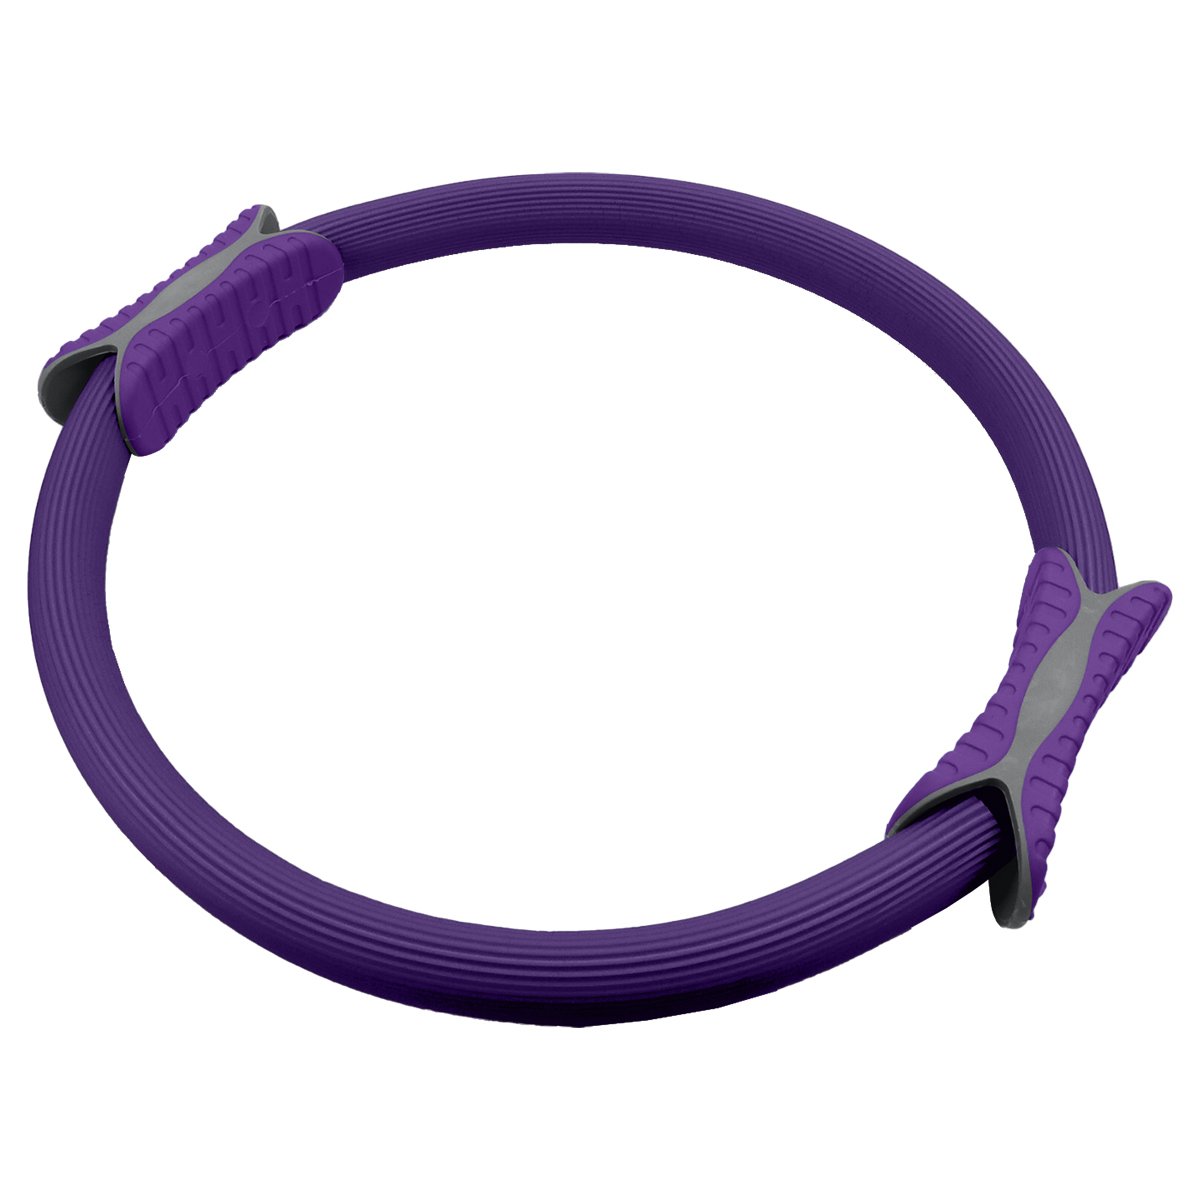 Powertrain Pilates Ring Band Yoga Home Workout Exercise Band Purple 2